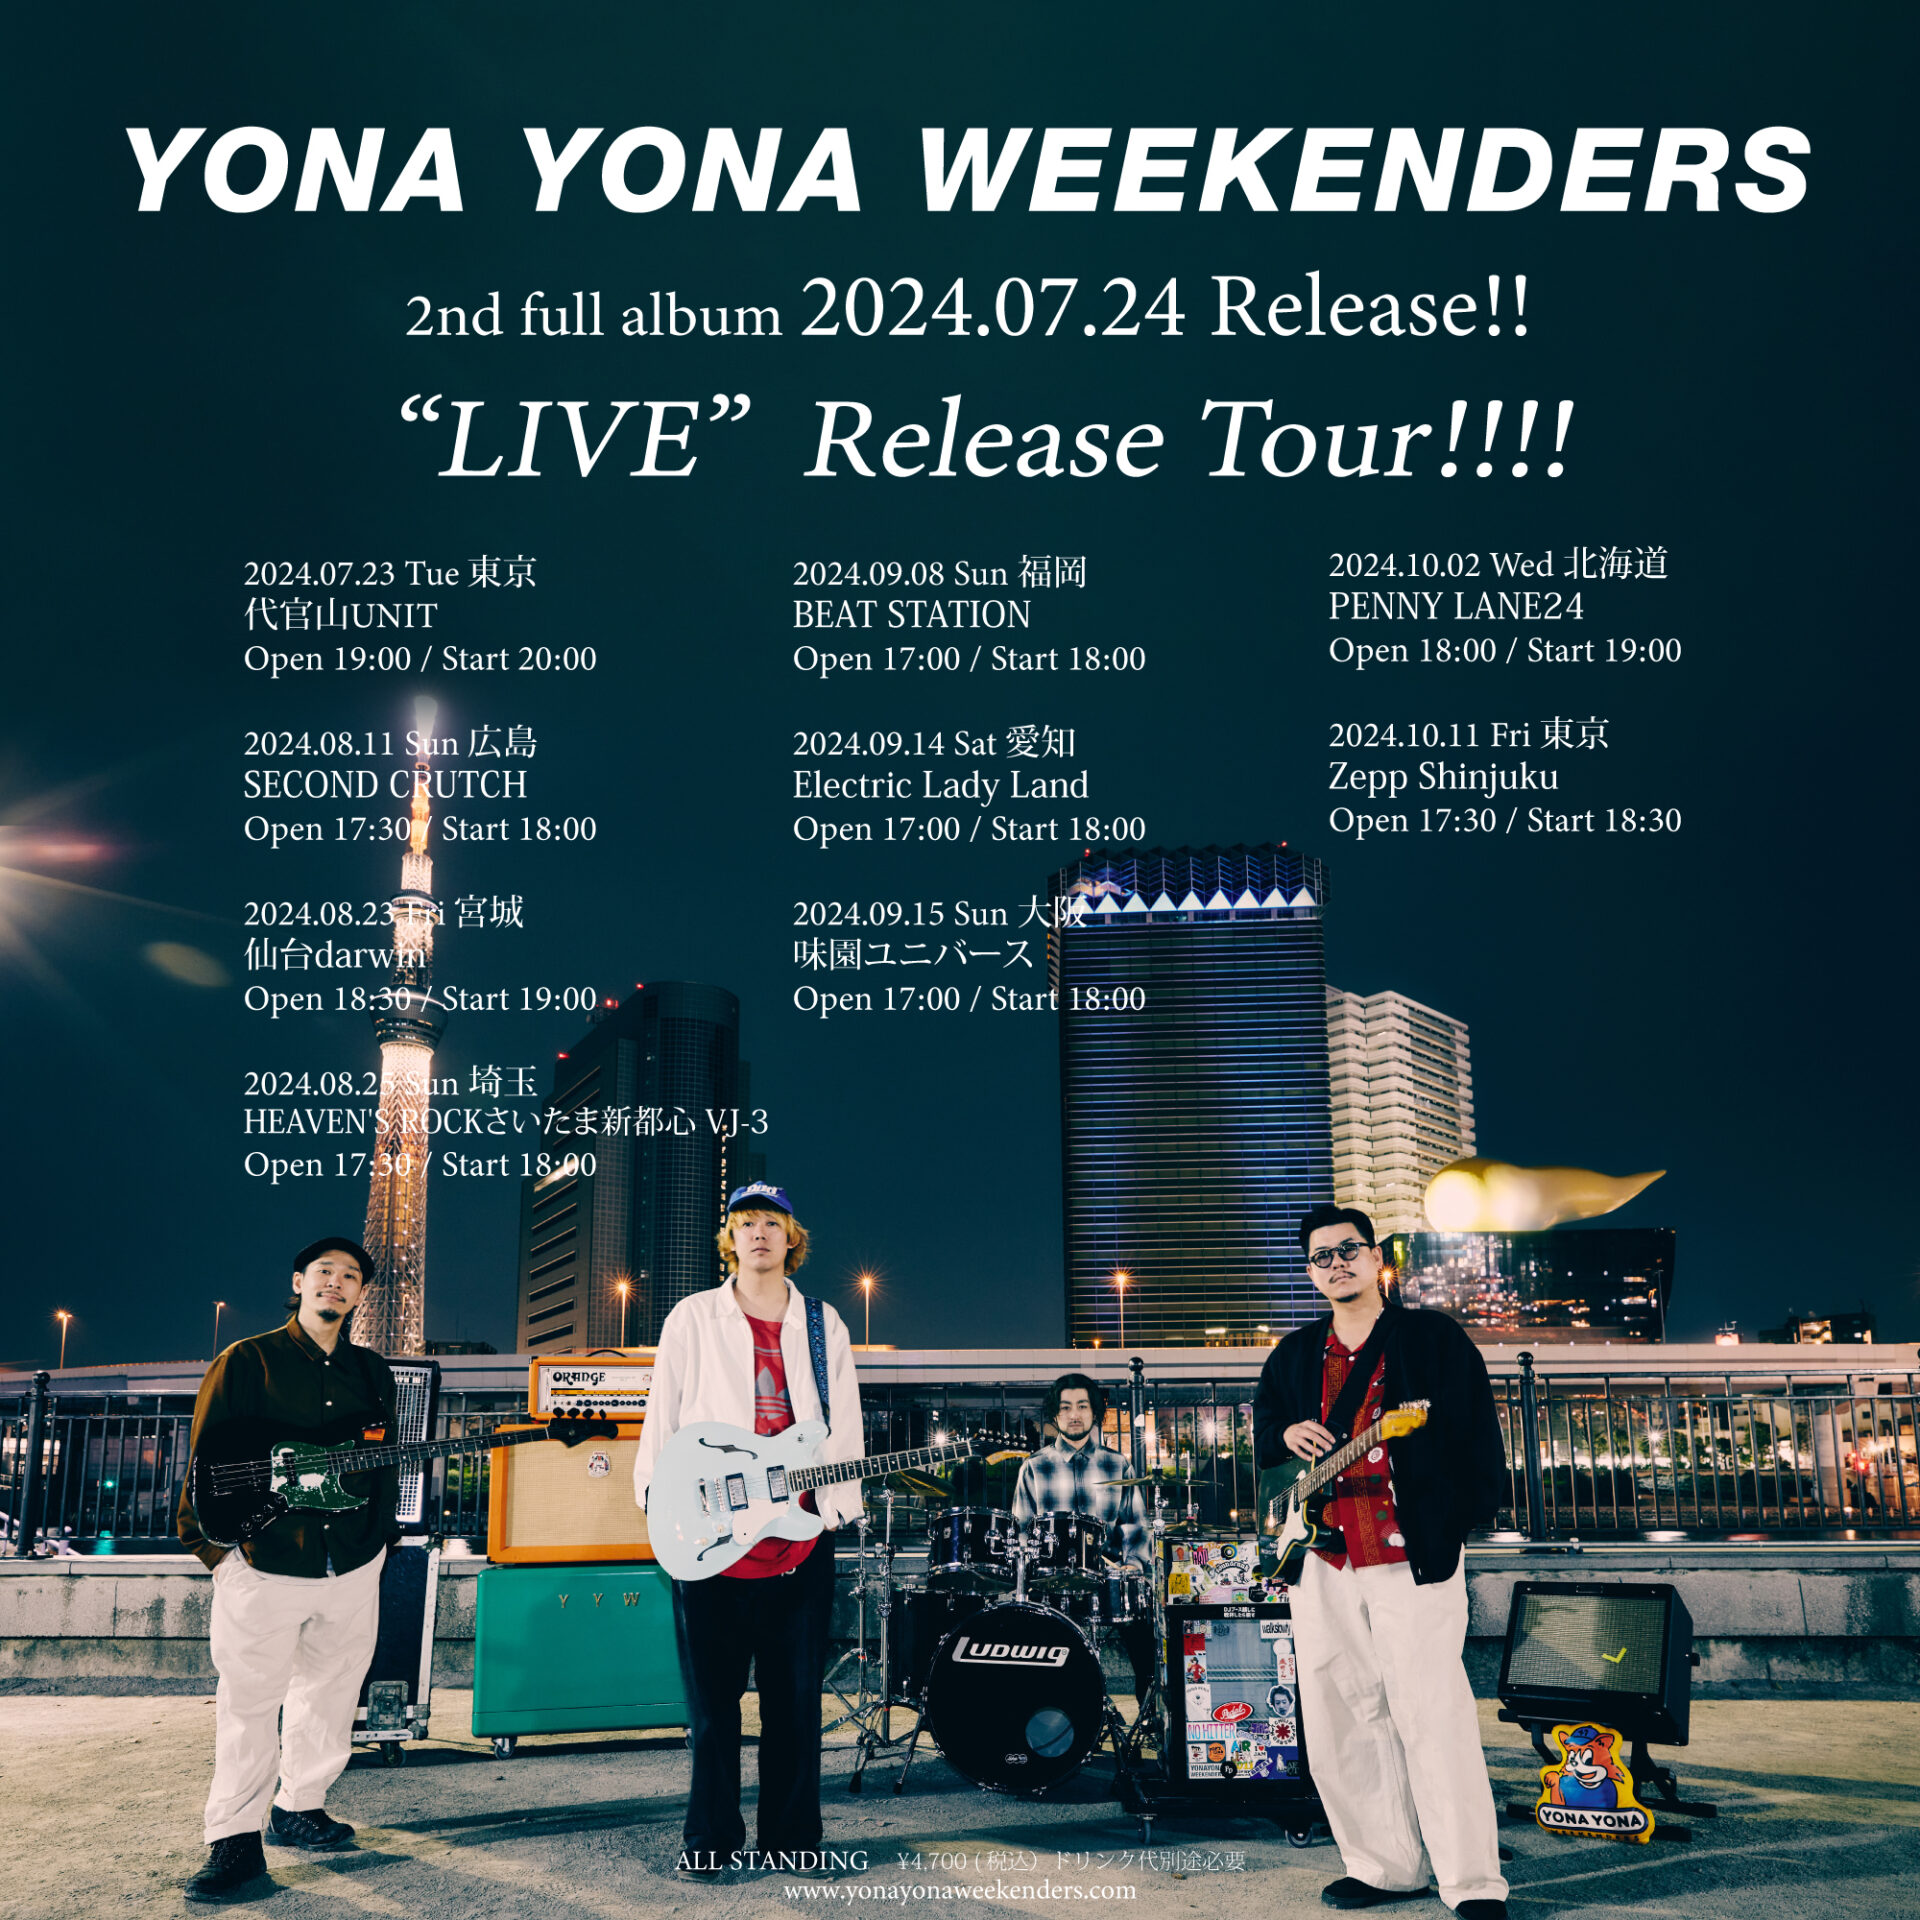 YONA YONA WEEKENDERS 2nd Full Album 